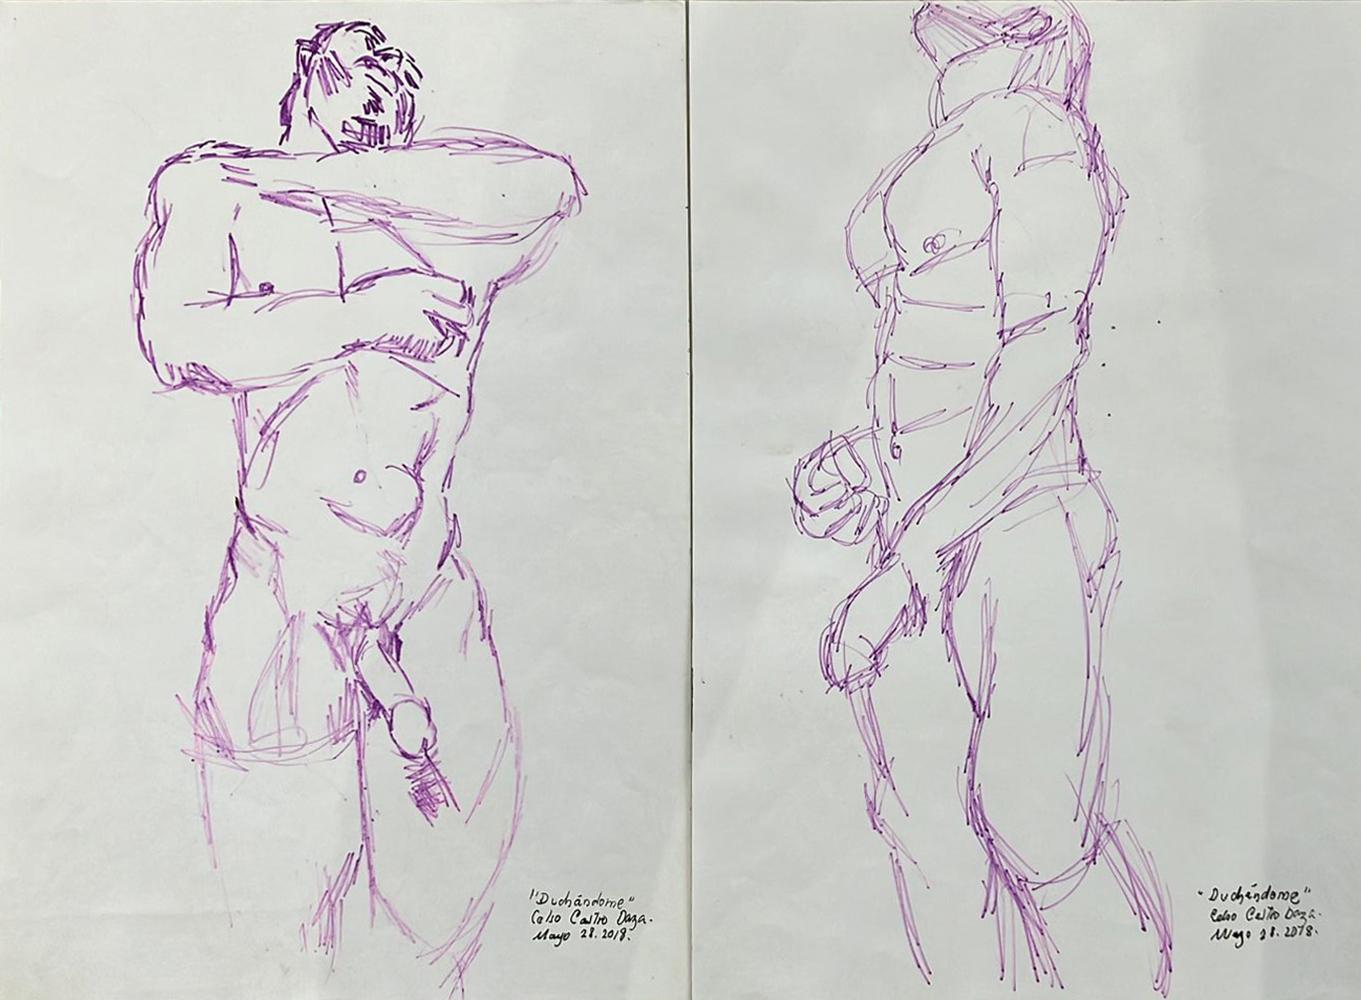 Nude Celso José Castro Daza - "Duchándome, 28 mai", diptyque à l'aquarelle, 2018